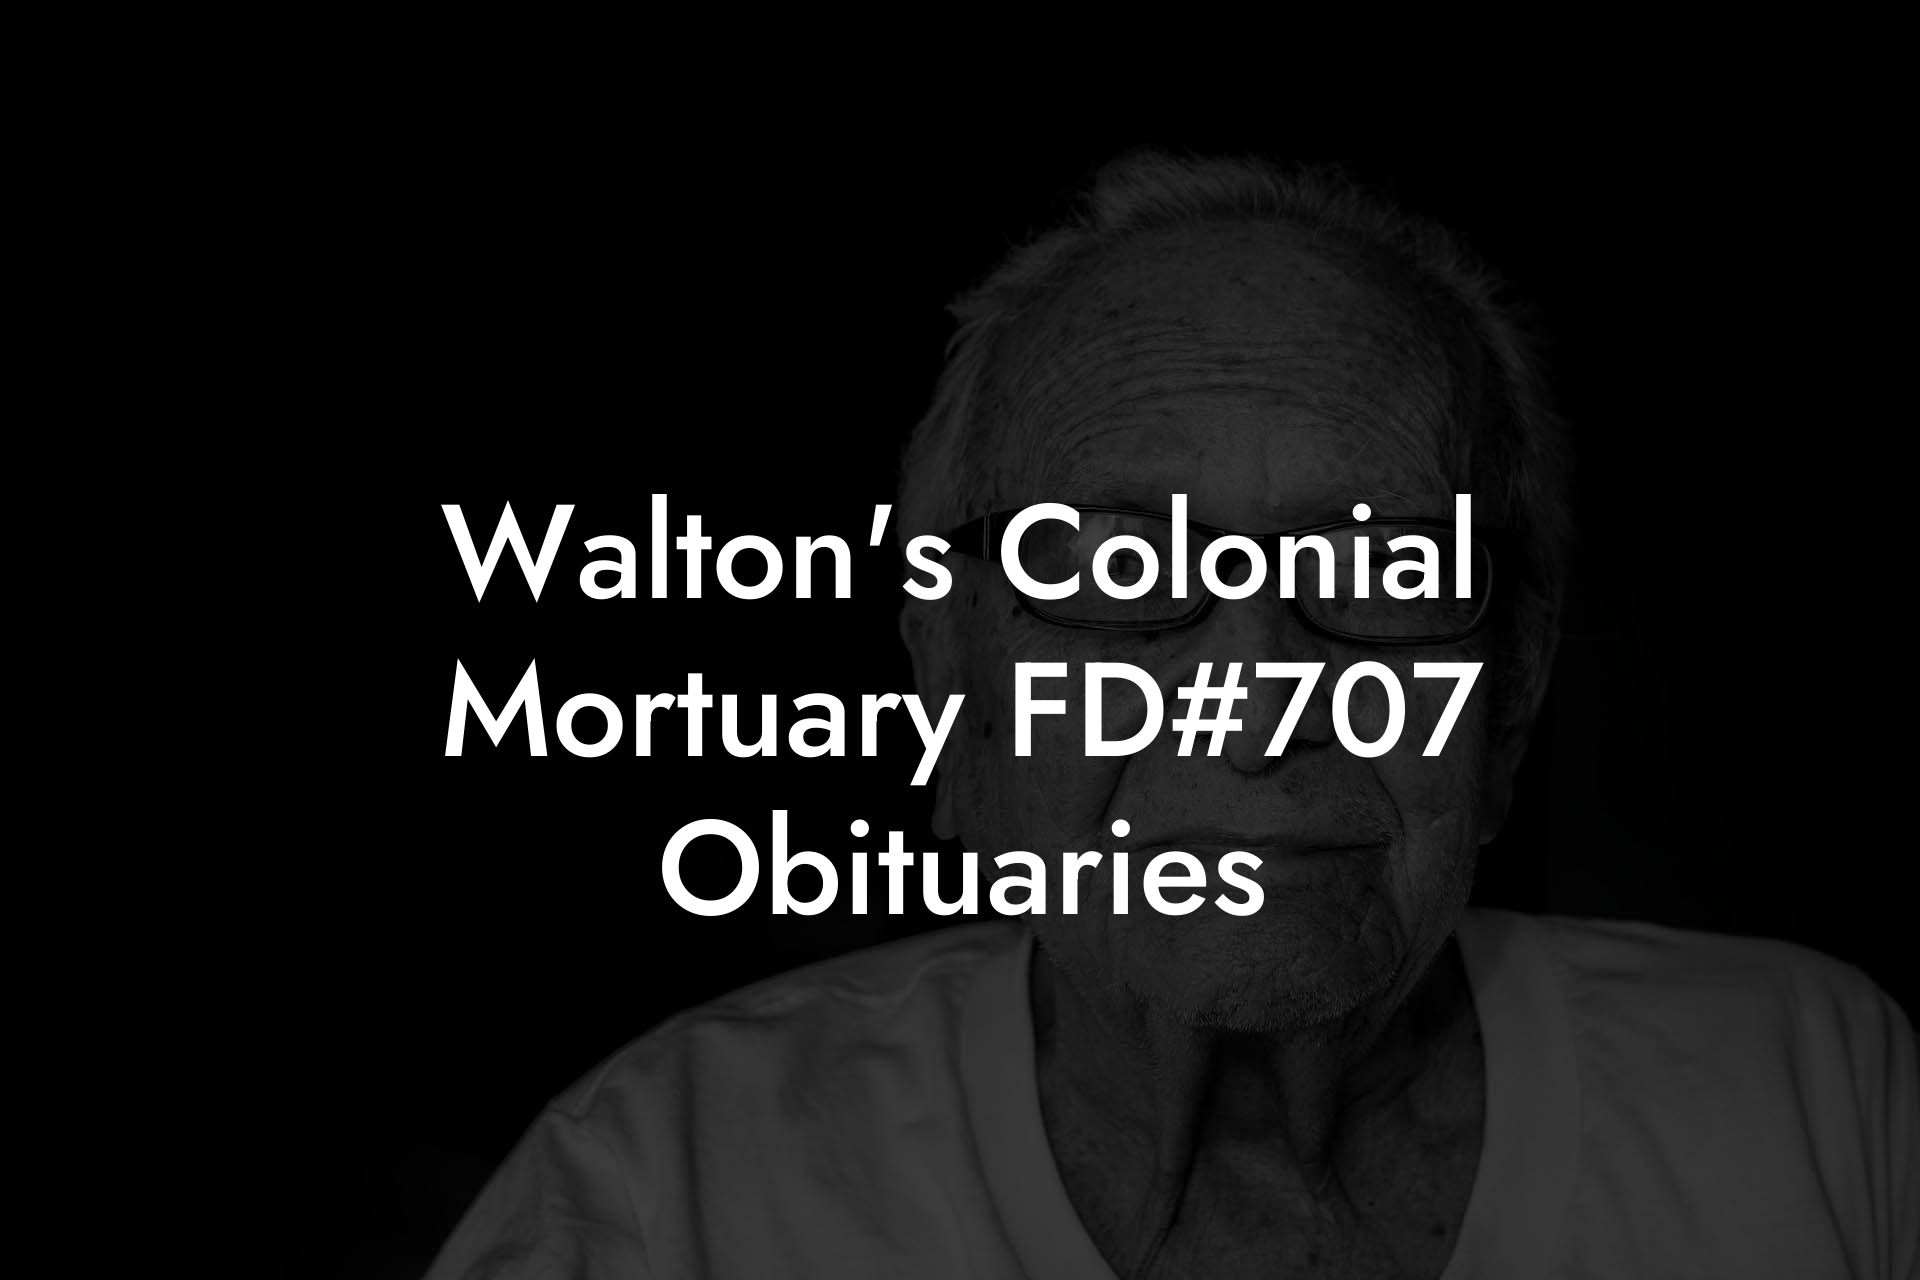 Walton's Colonial Mortuary FD#707 Obituaries